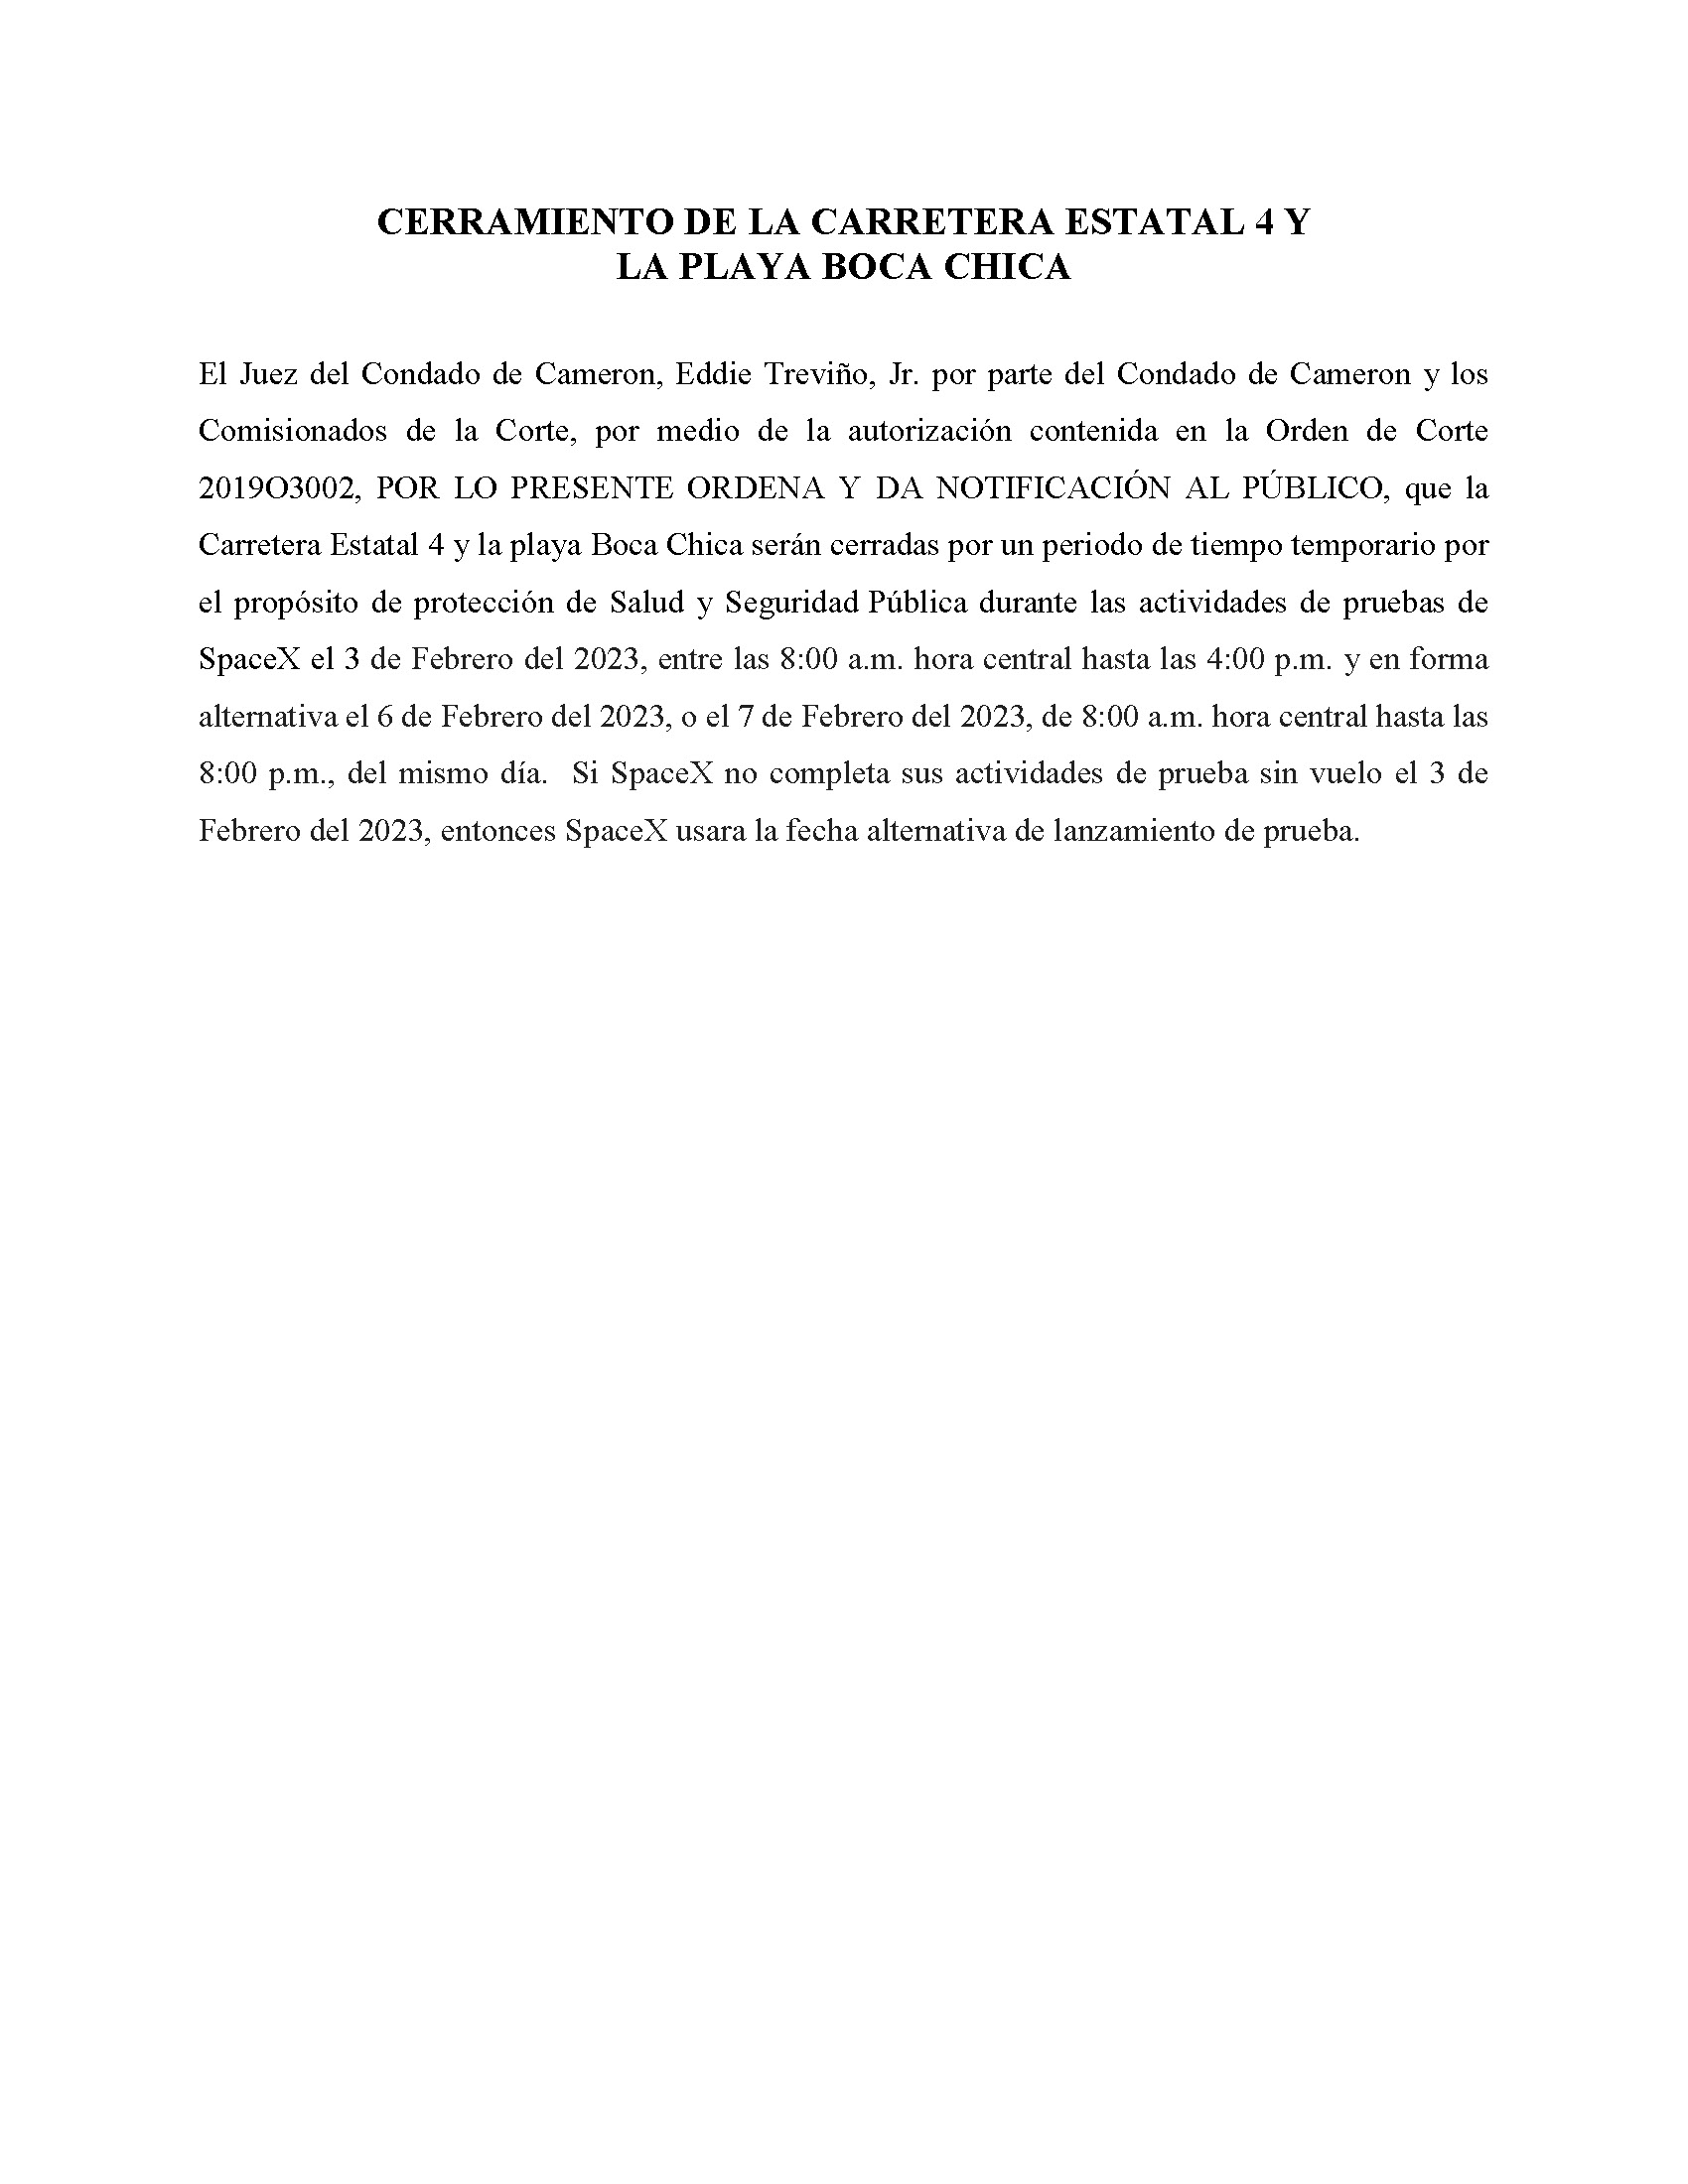 ORDER.CLOSURE OF HIGHWAY 4 Y LA PLAYA BOCA CHICA.SPANISH.02.03.23